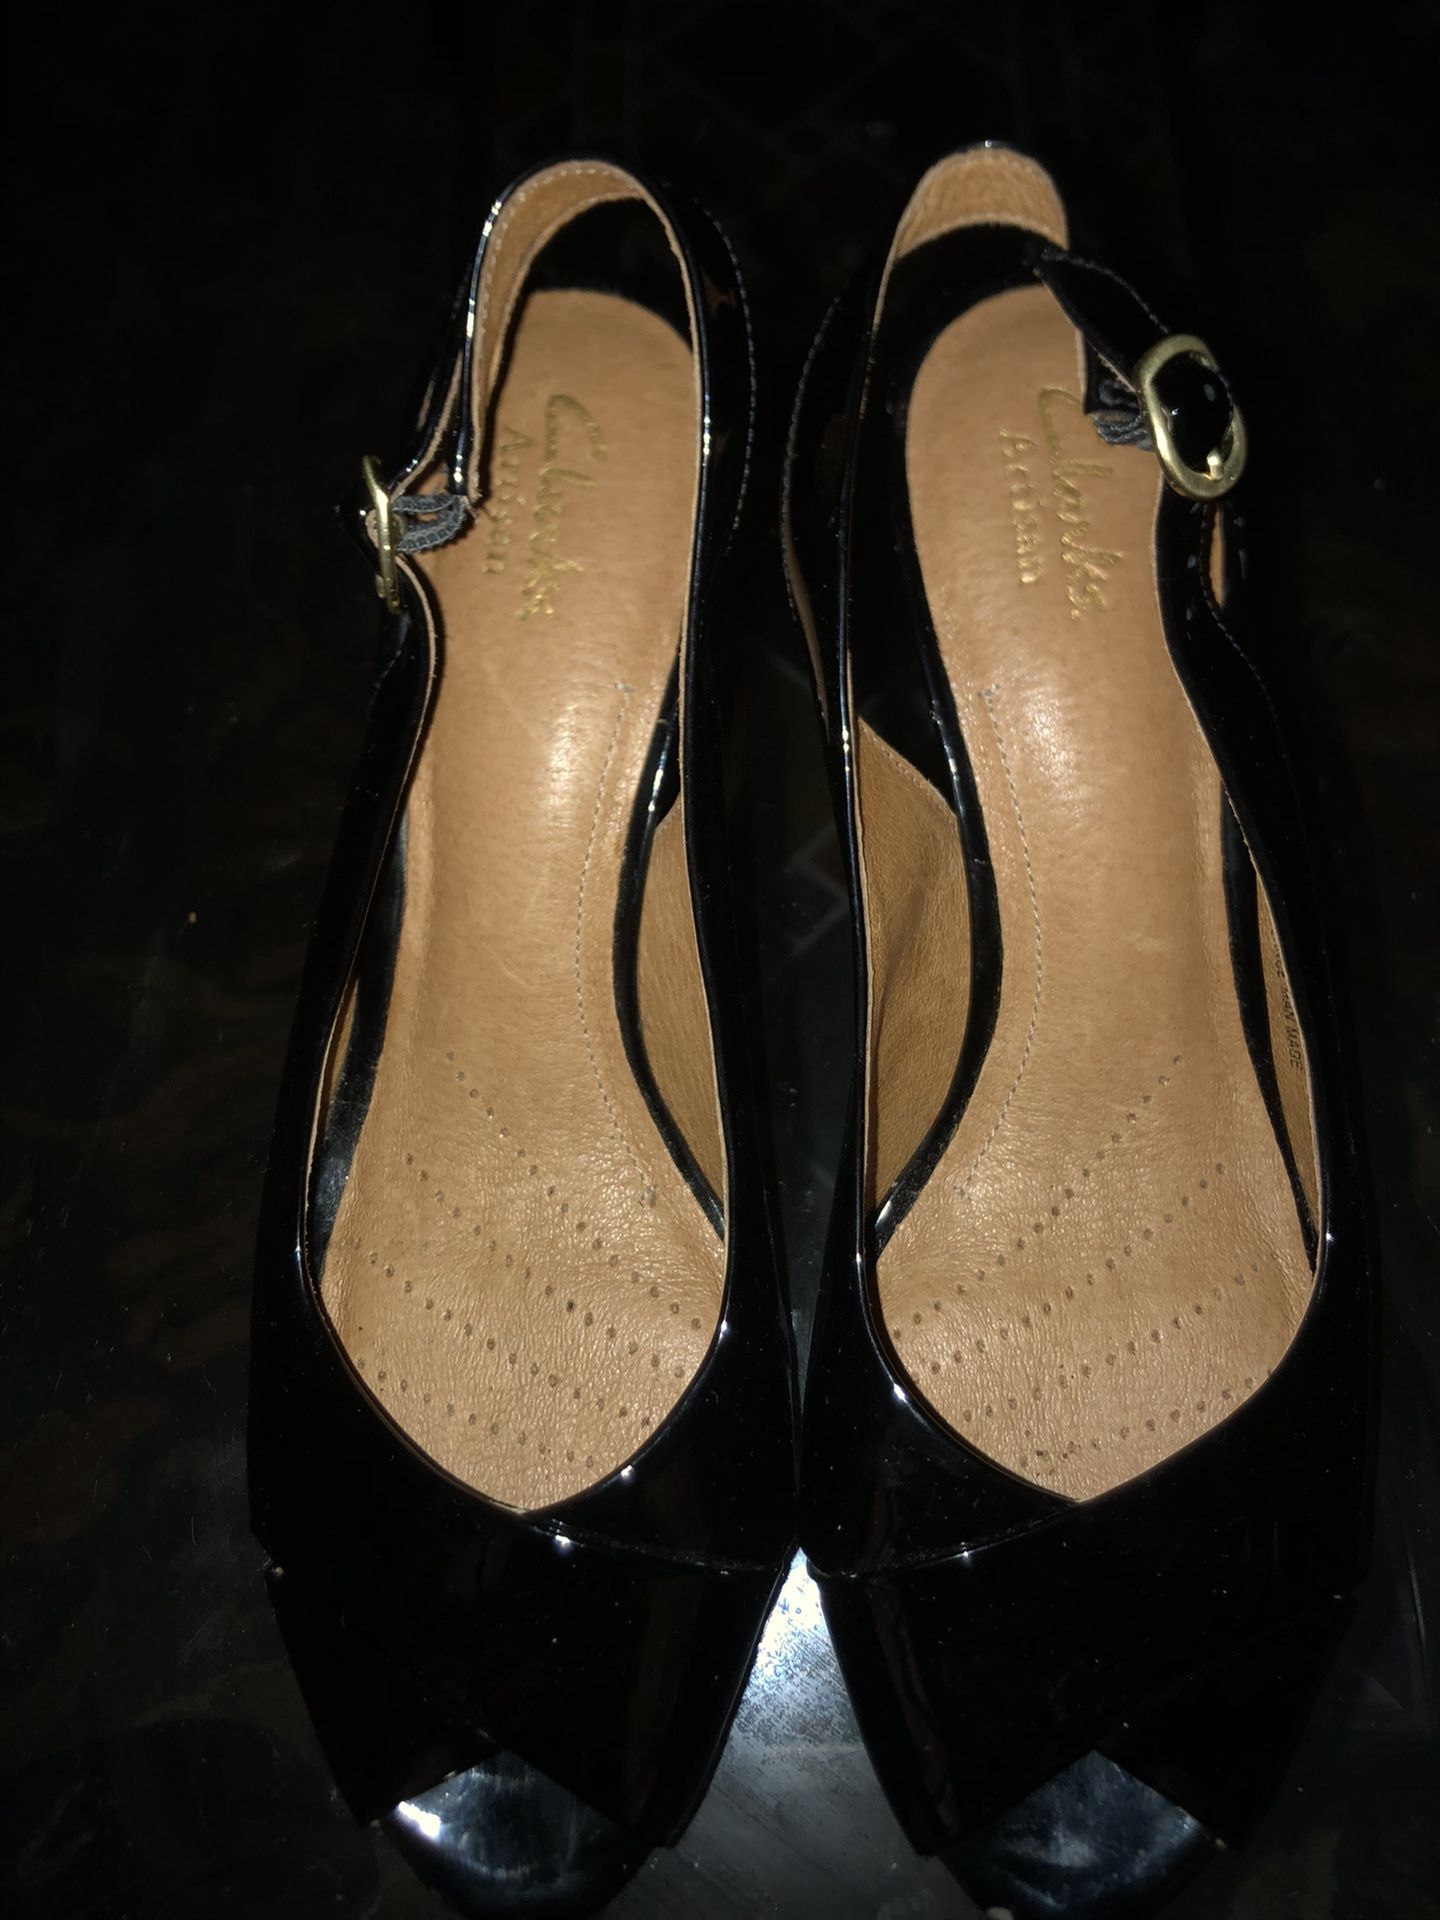 Clark artisans black high heels